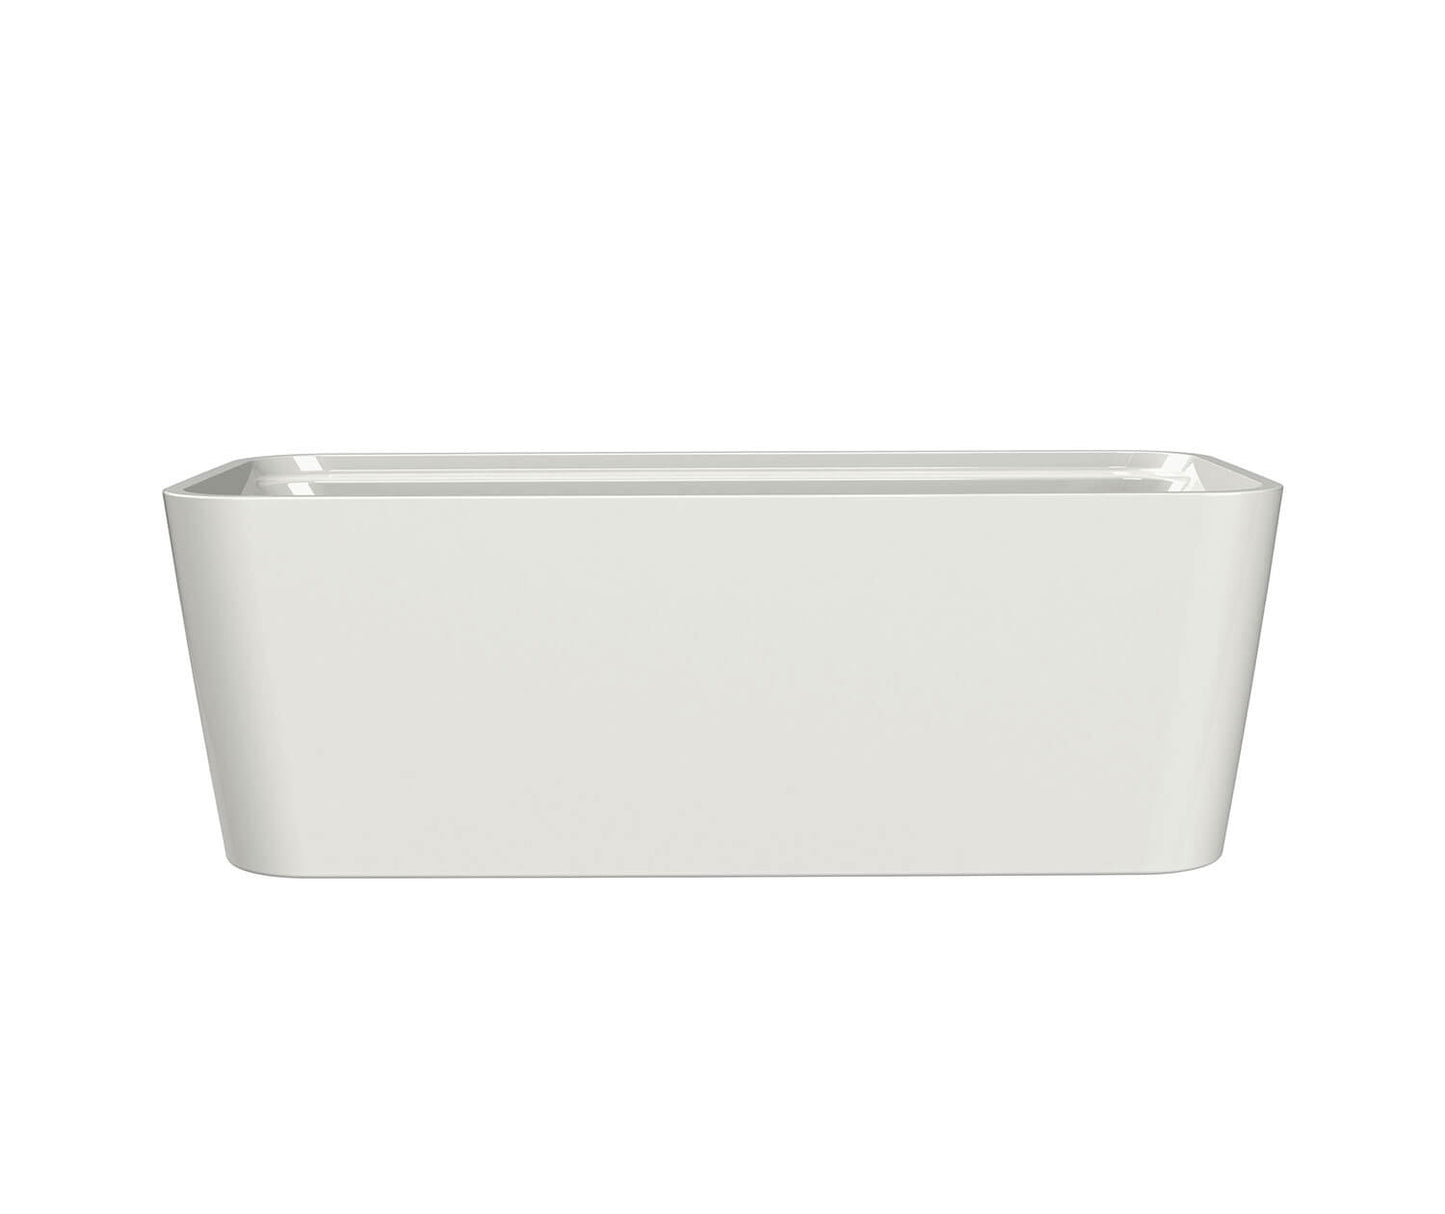 Maax Oberto 67 x 31 Acrylic Freestanding Center Drain Bathtub in White with White Skirt 106386